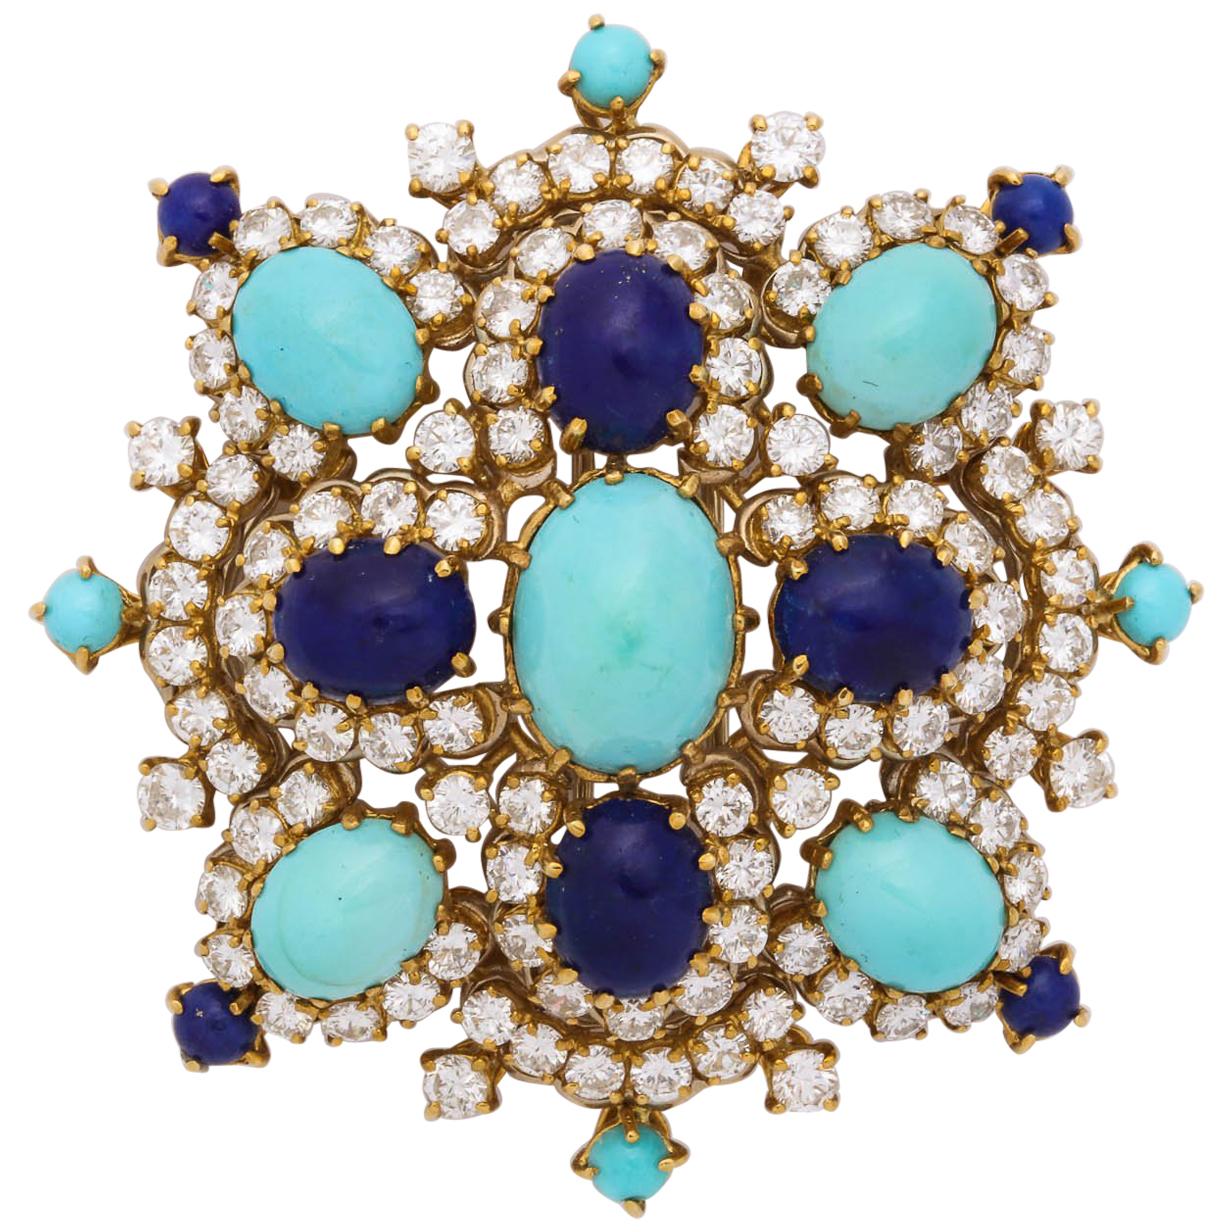 Turquoise, Lapis Lazuli, Diamond and Gold Brooch